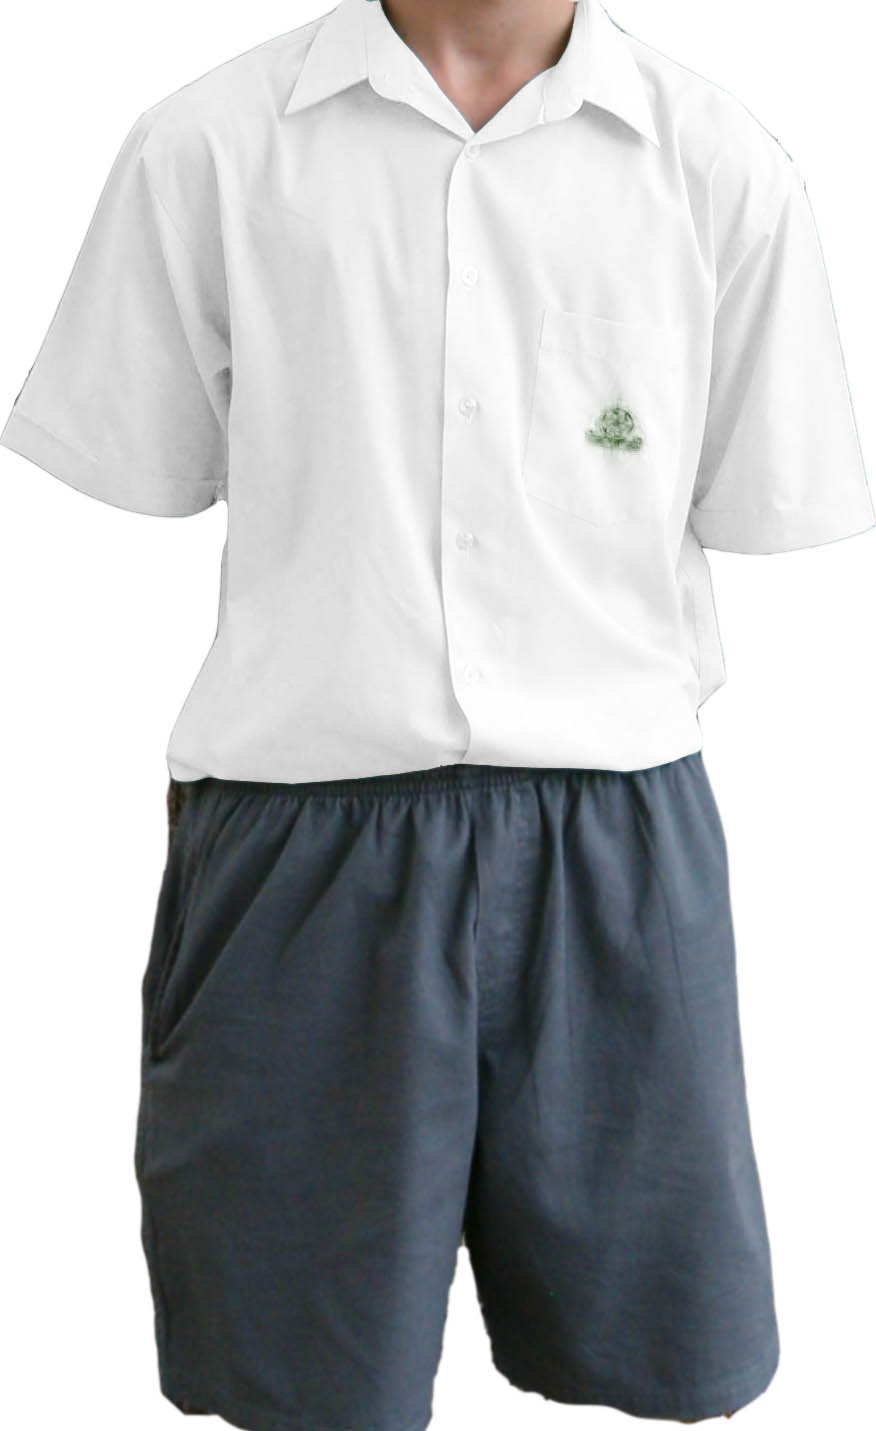 Essay school uniform